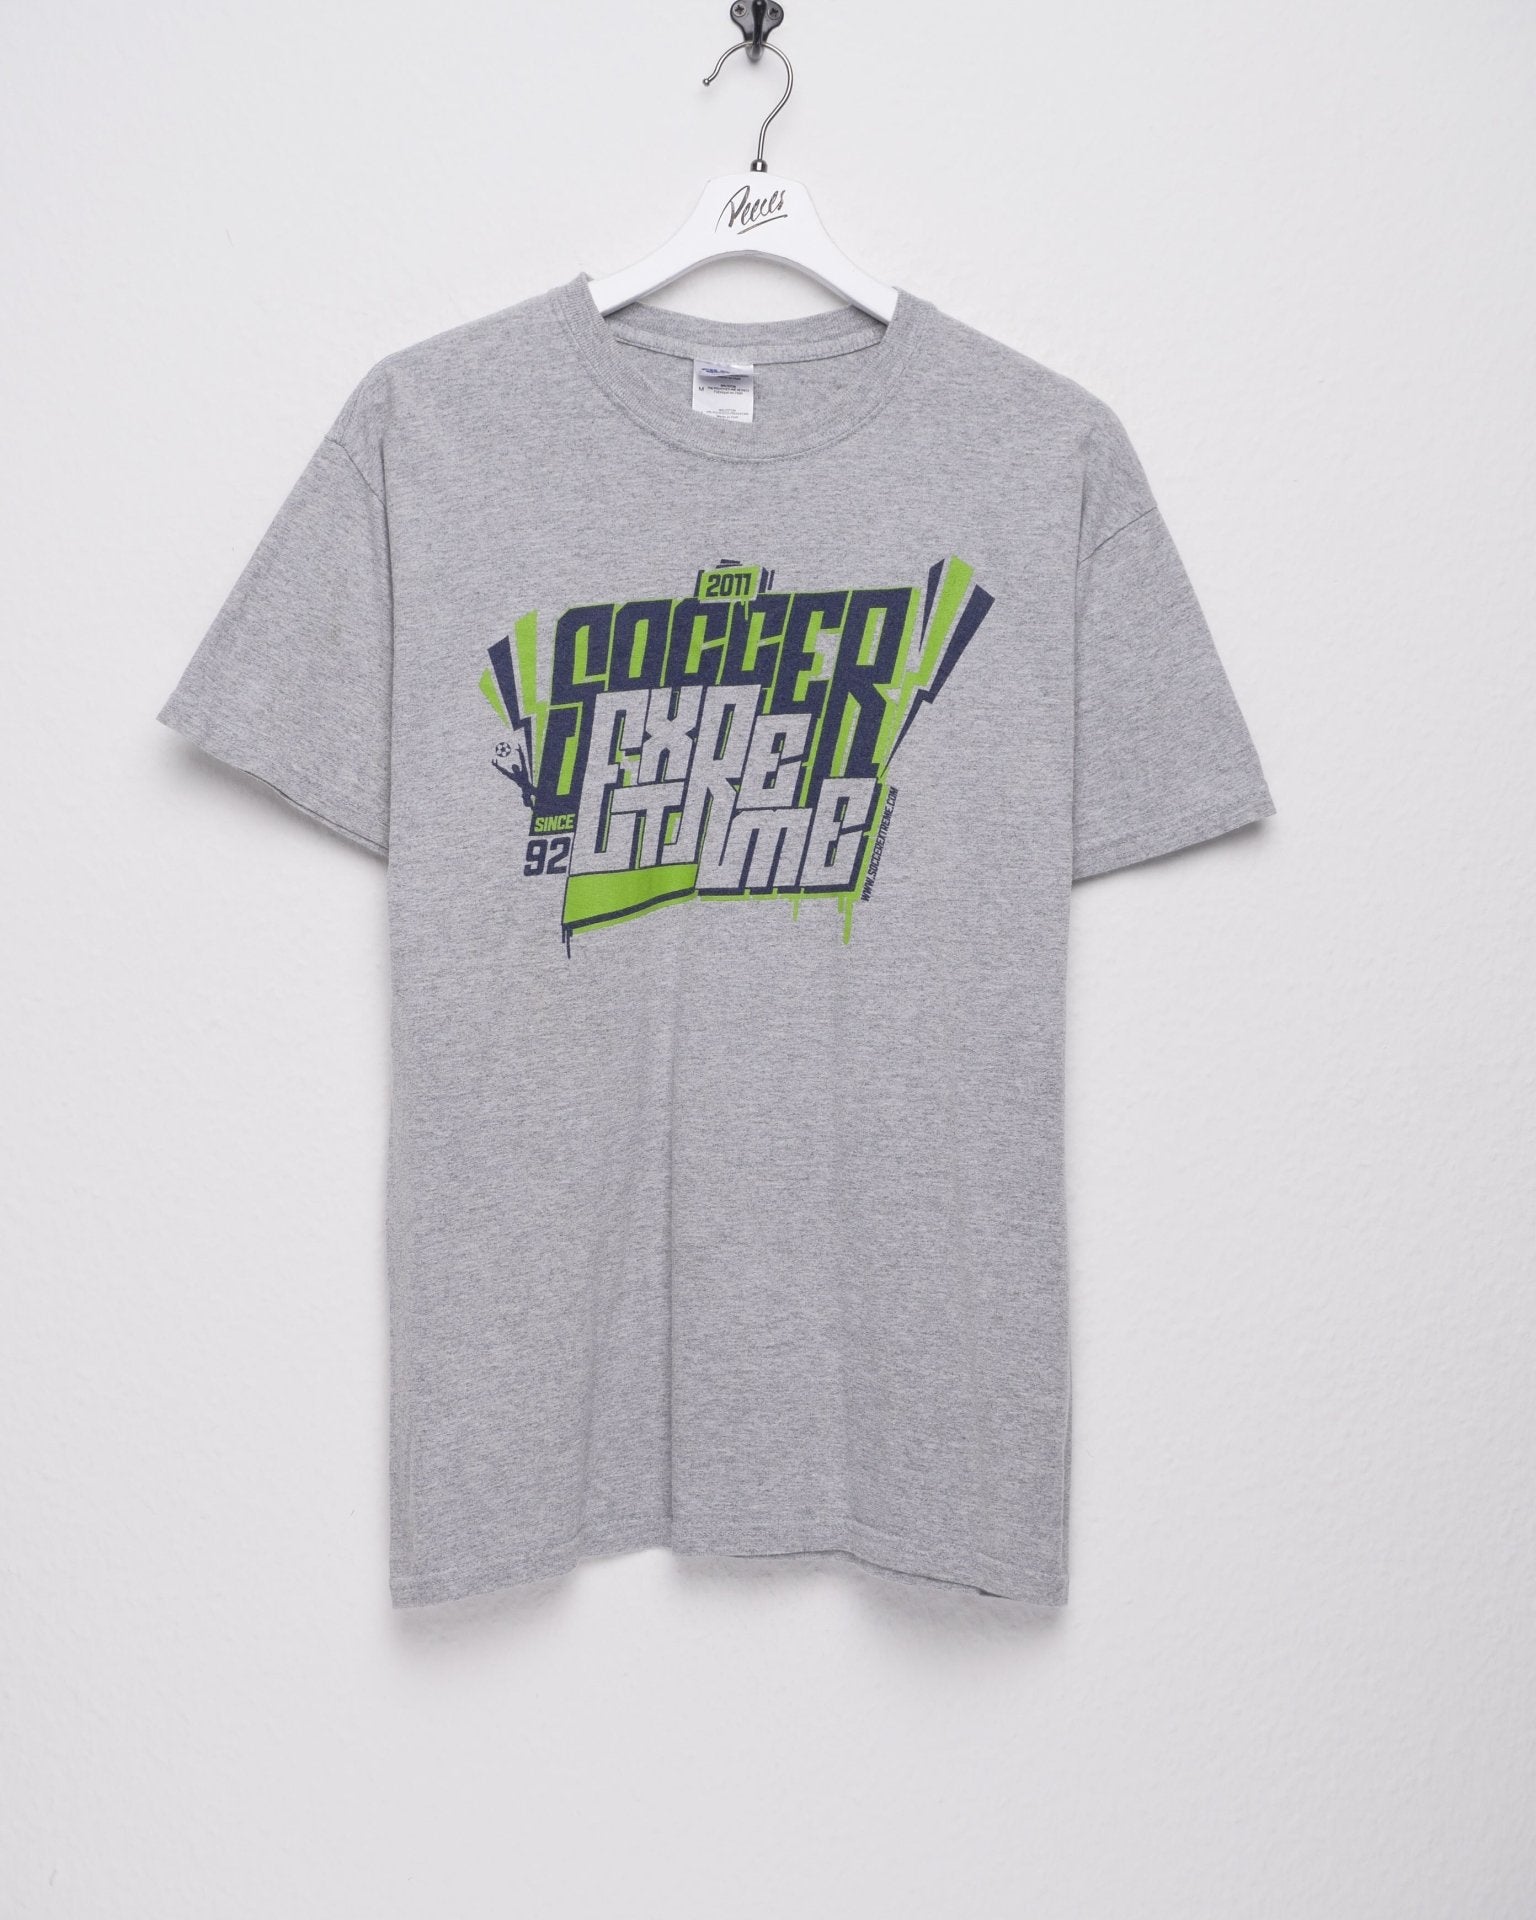 Soccer 2011 printed Graphic grey Shirt - Peeces